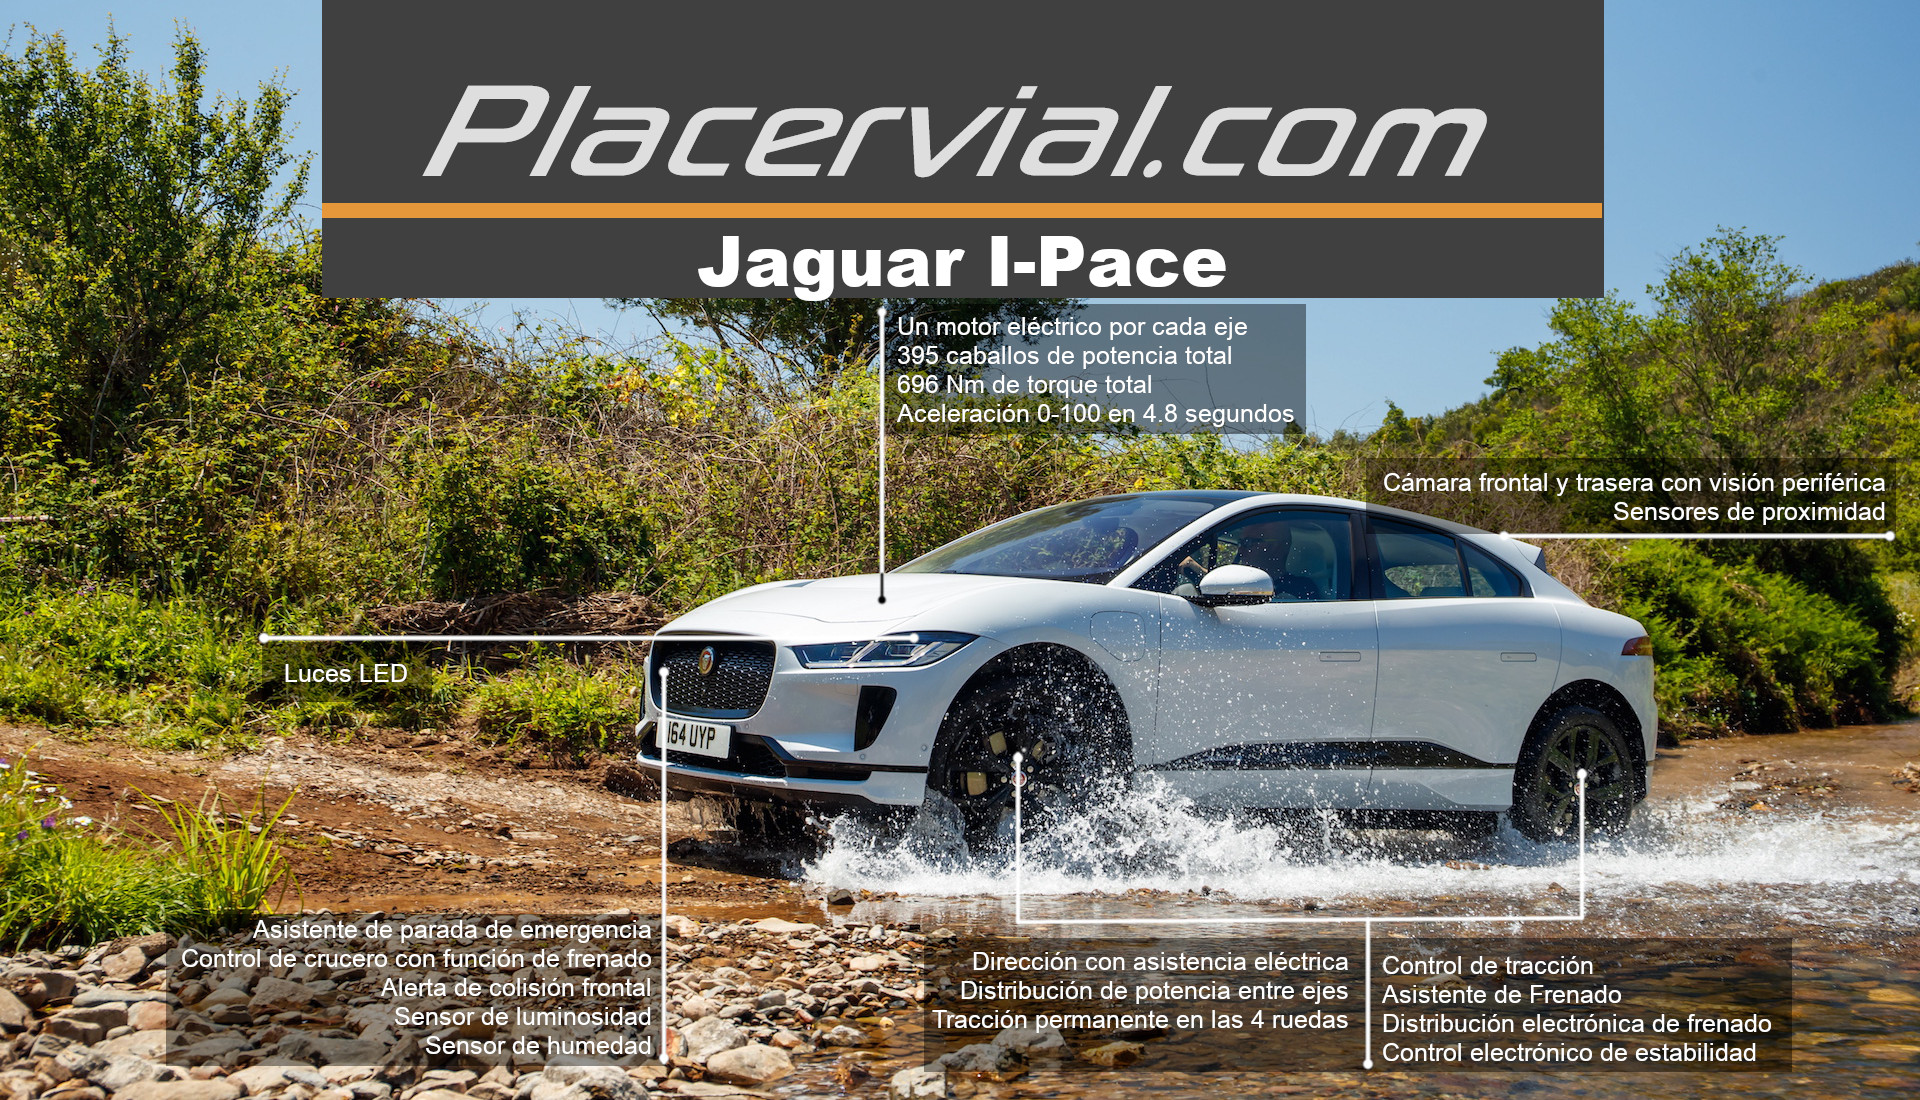 Jaguar I-Pace: Infografía